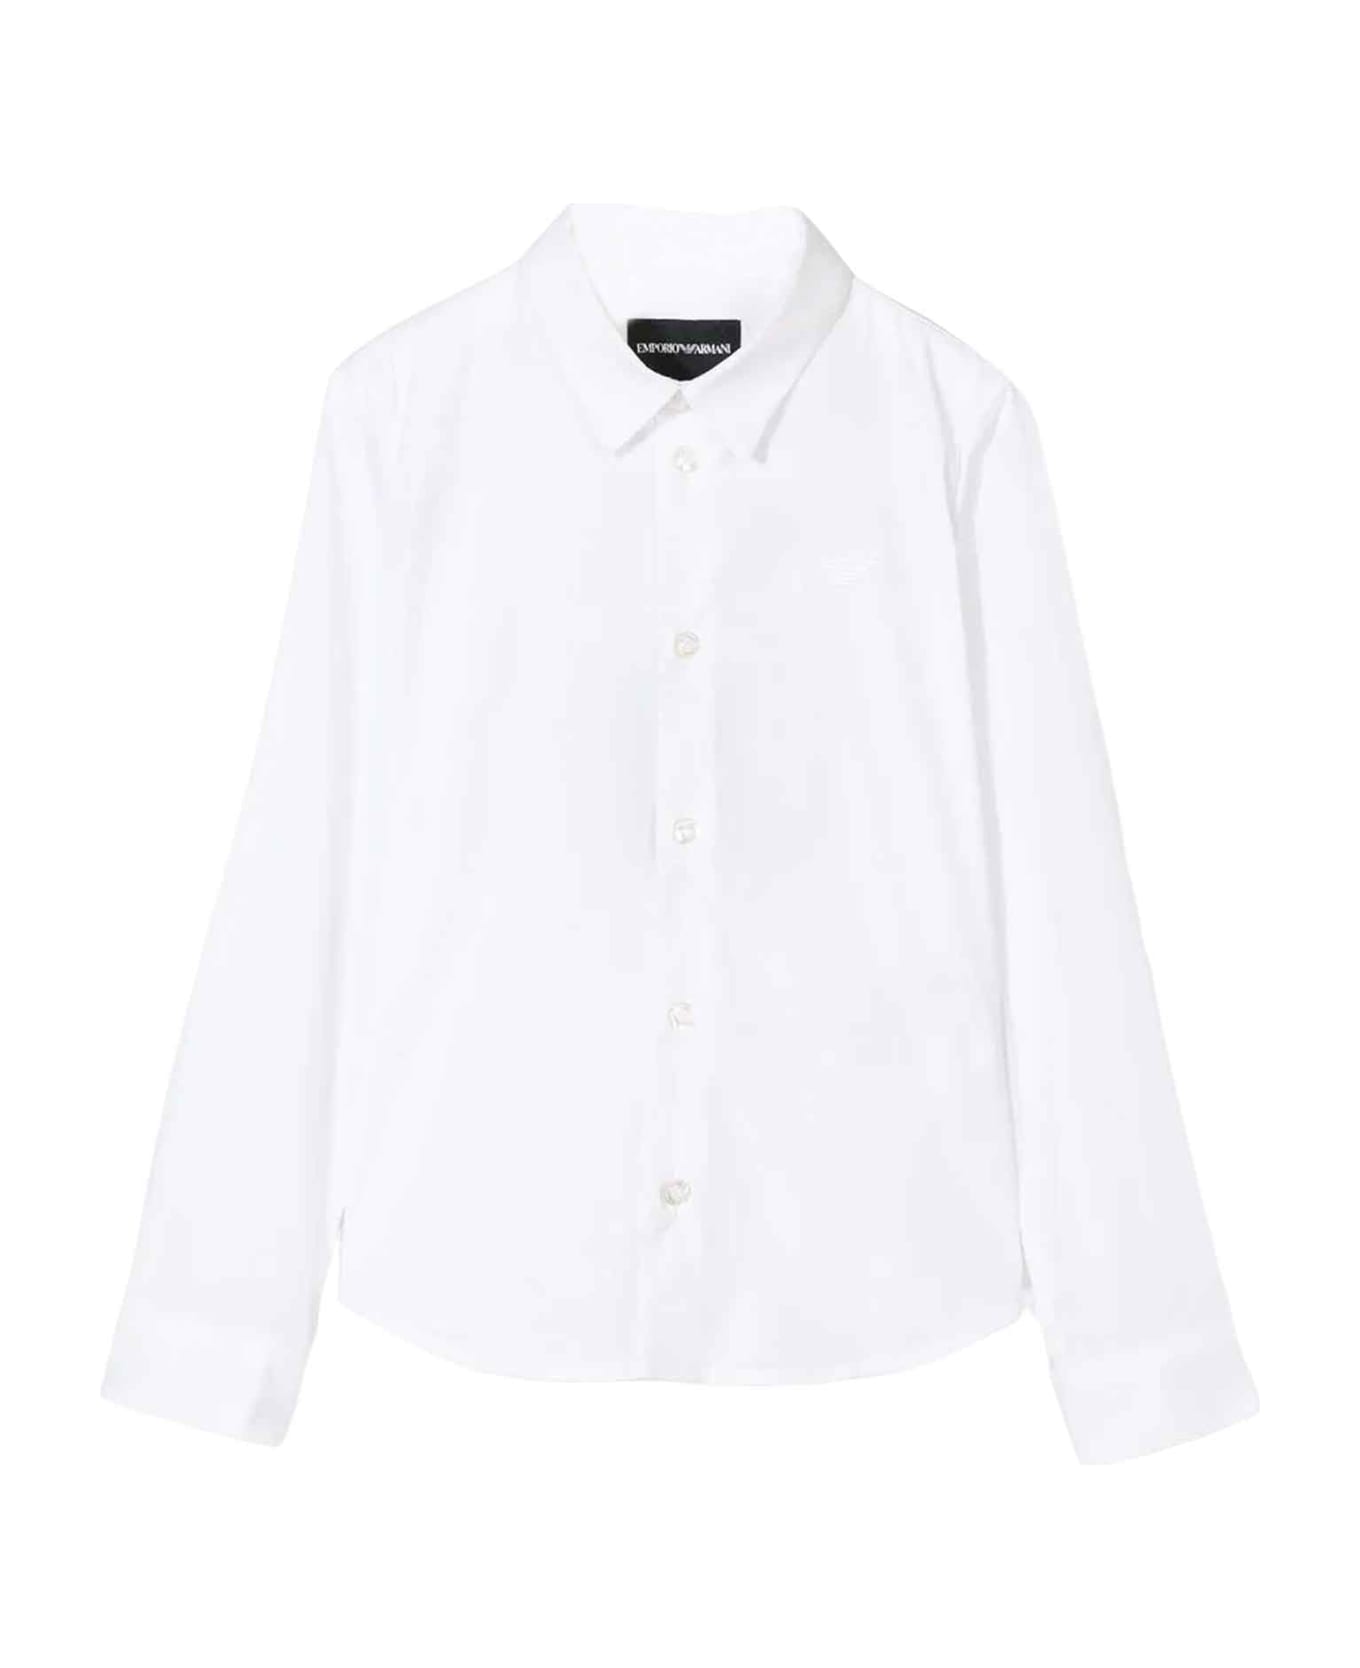 Emporio Armani White Shirt Boy - Bianco ottico シャツ